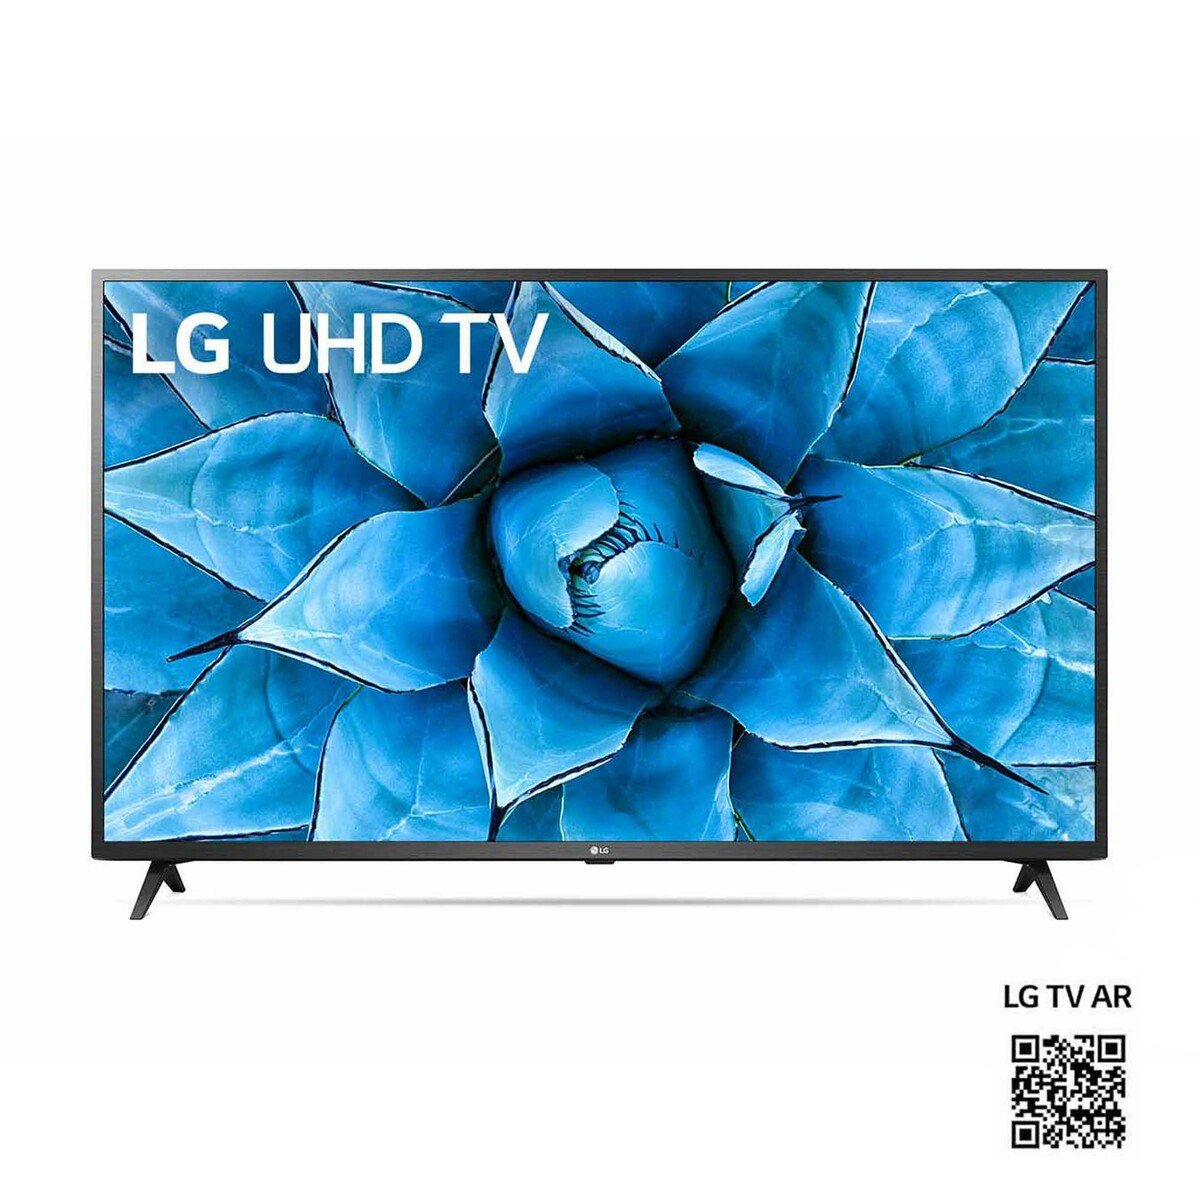 LG 4K Ultra HD Smart LED TV 55UN7340PVC 55"